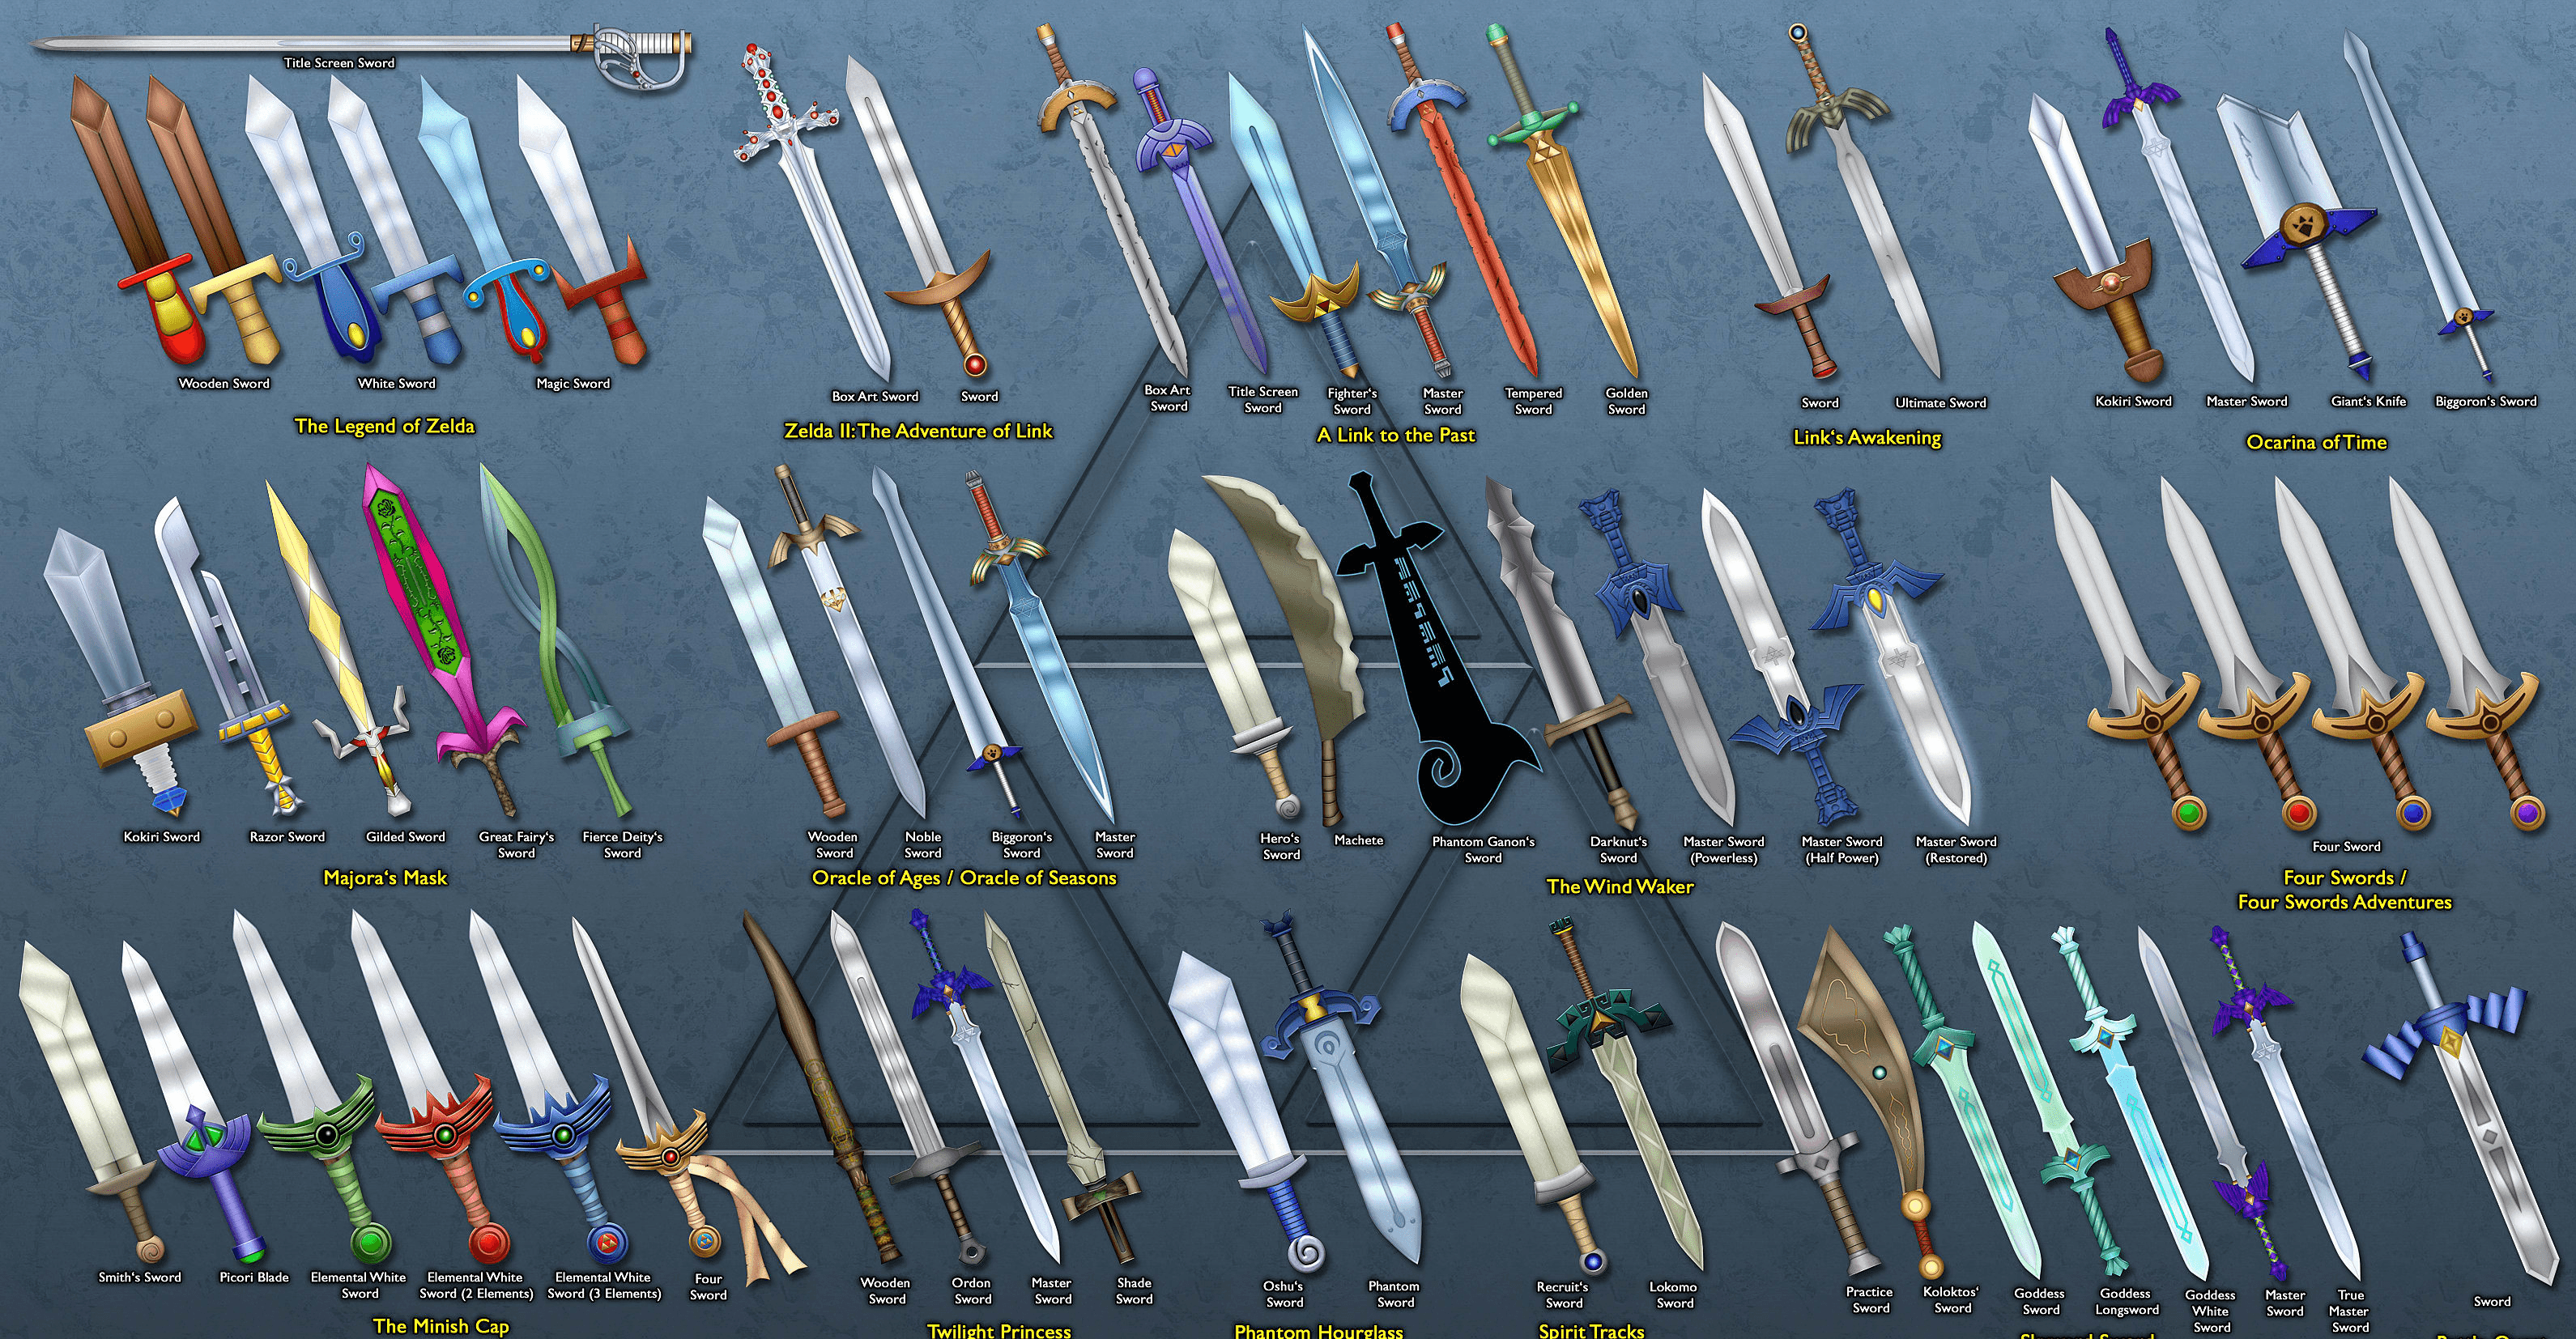 legendary sword names